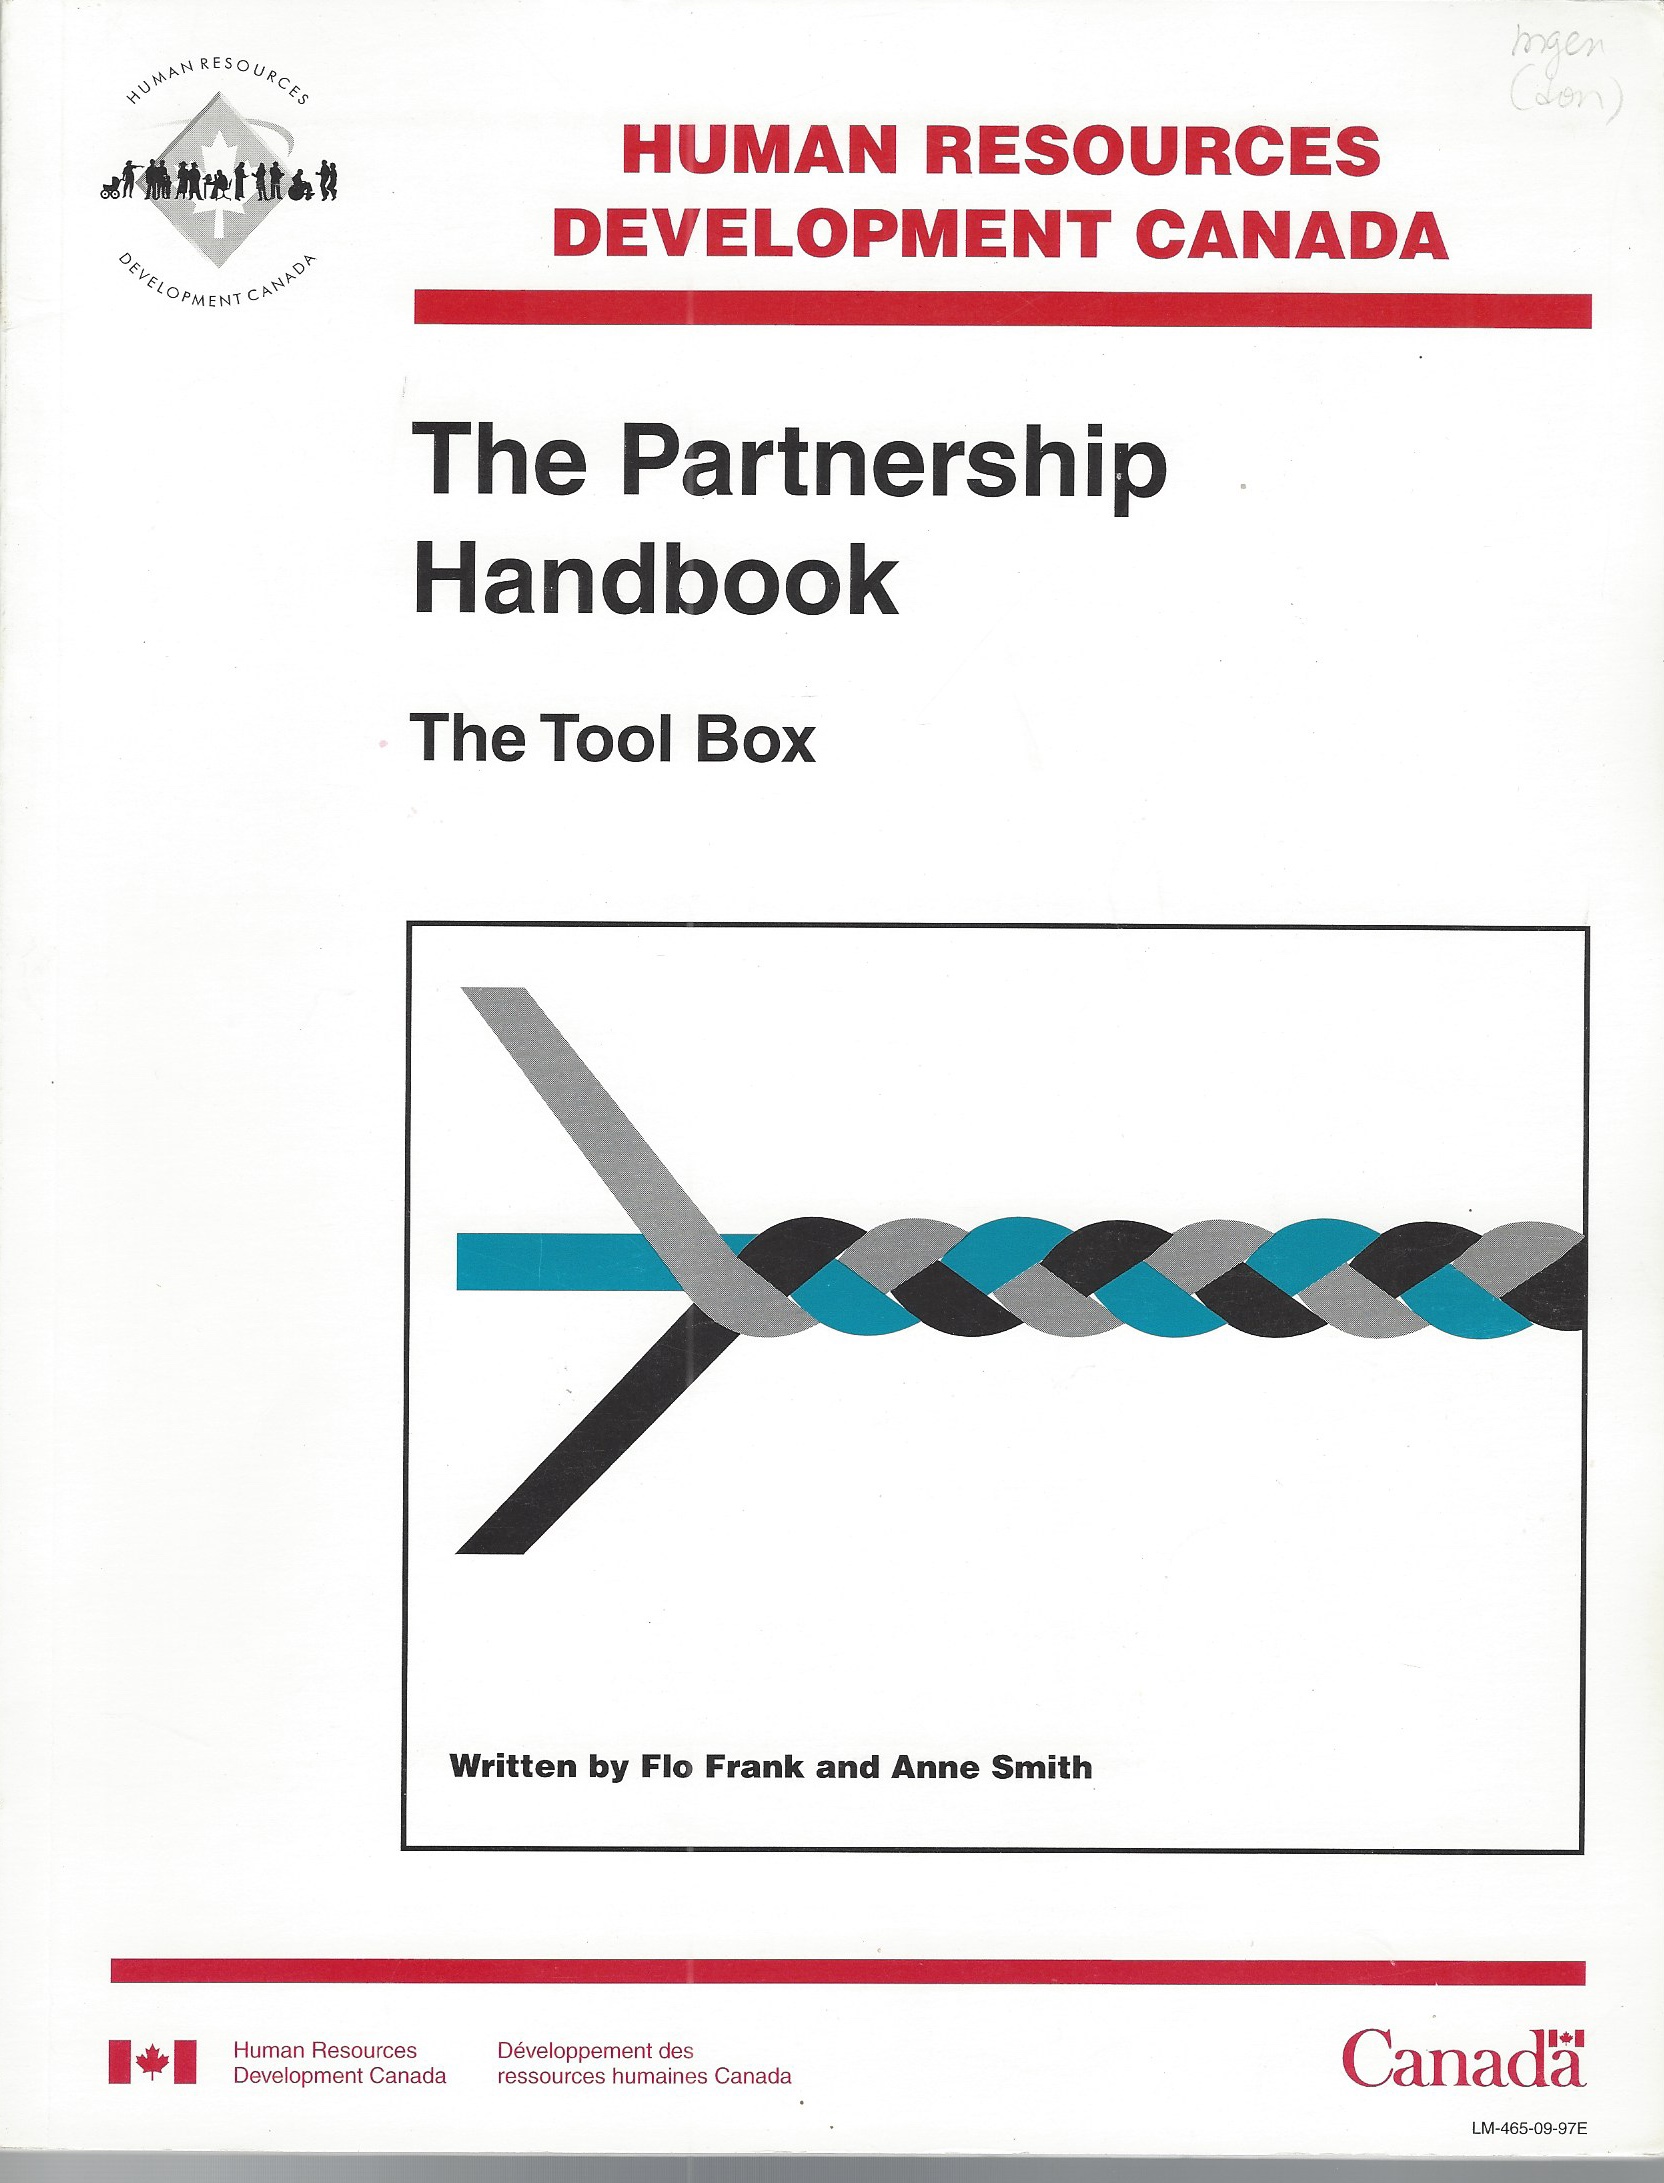 KING KEN, ANNE SMITH, FLO FRANK - Partnership Handbook, the Facilitator's Guide, & the Tool Box Human Resources Development Canada